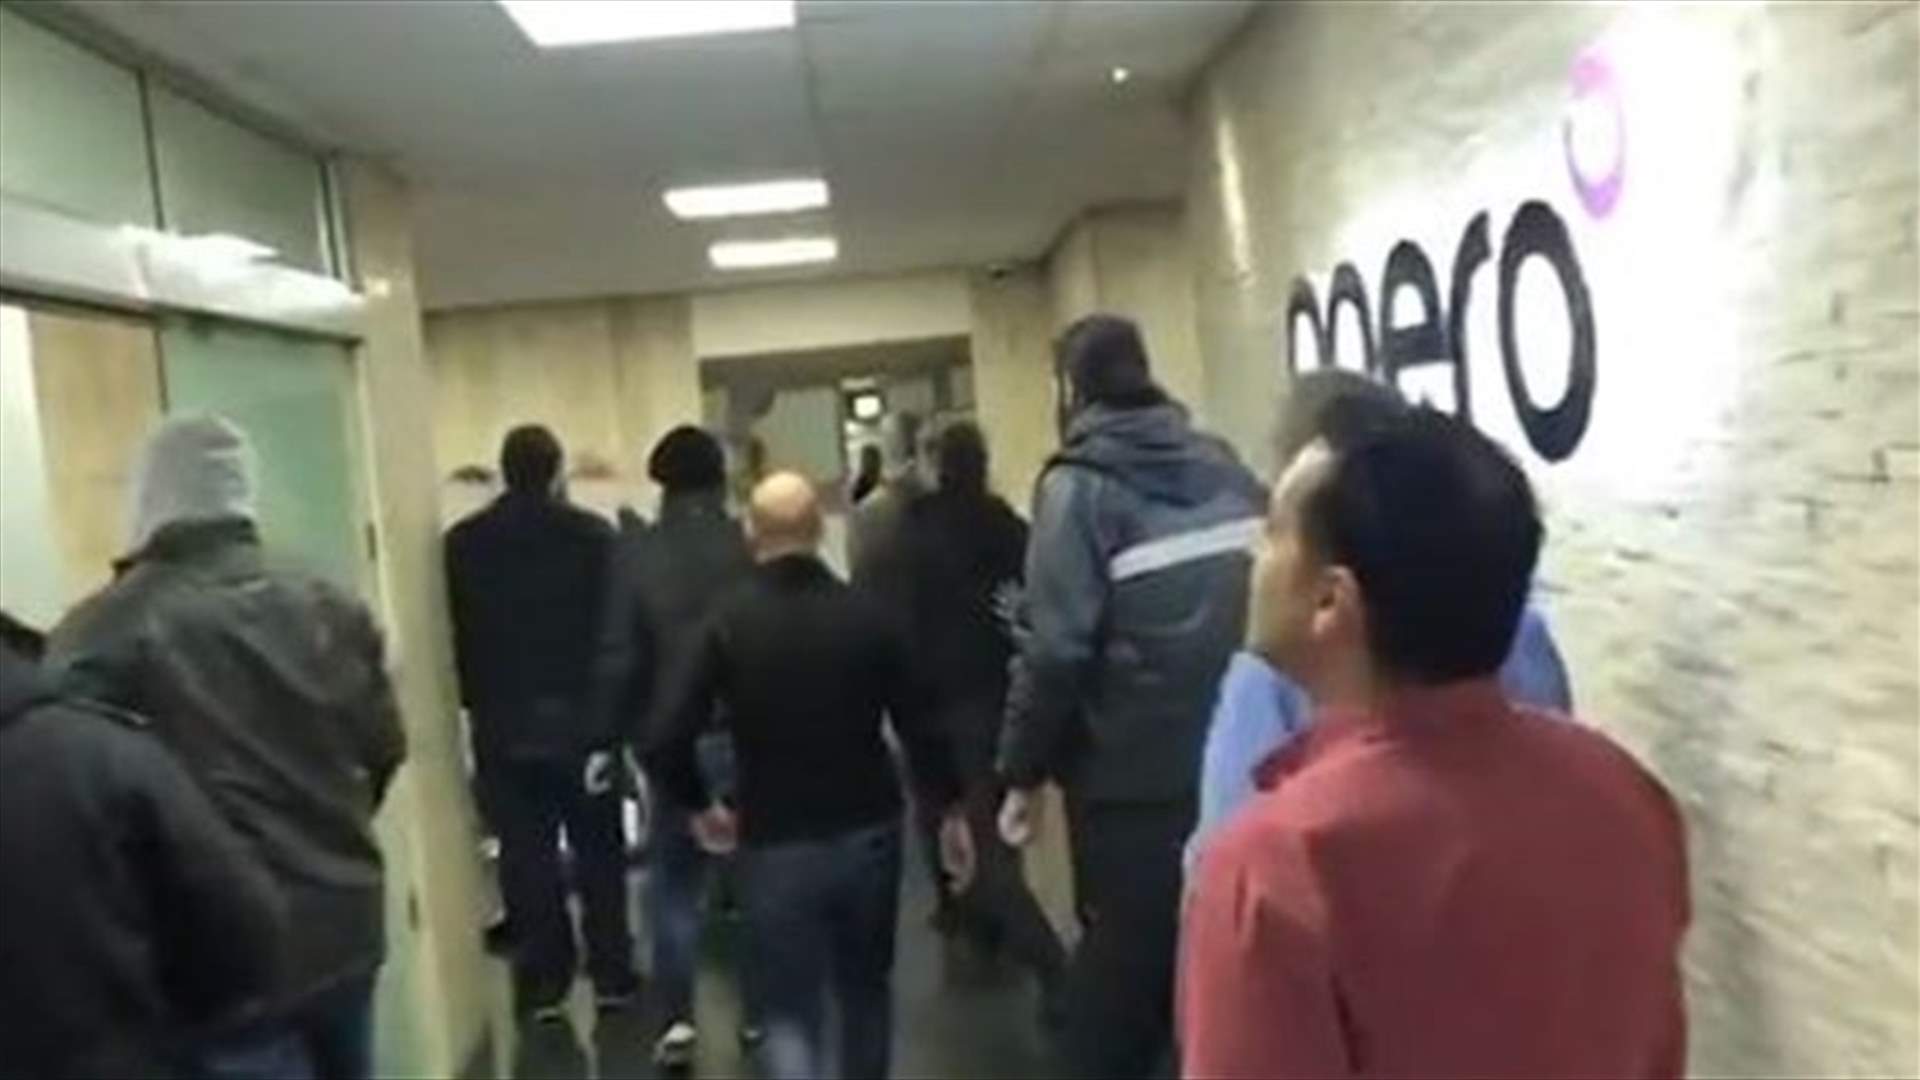 Protesters storm into Ogero building in Bir Hassan in Beirut (Video)